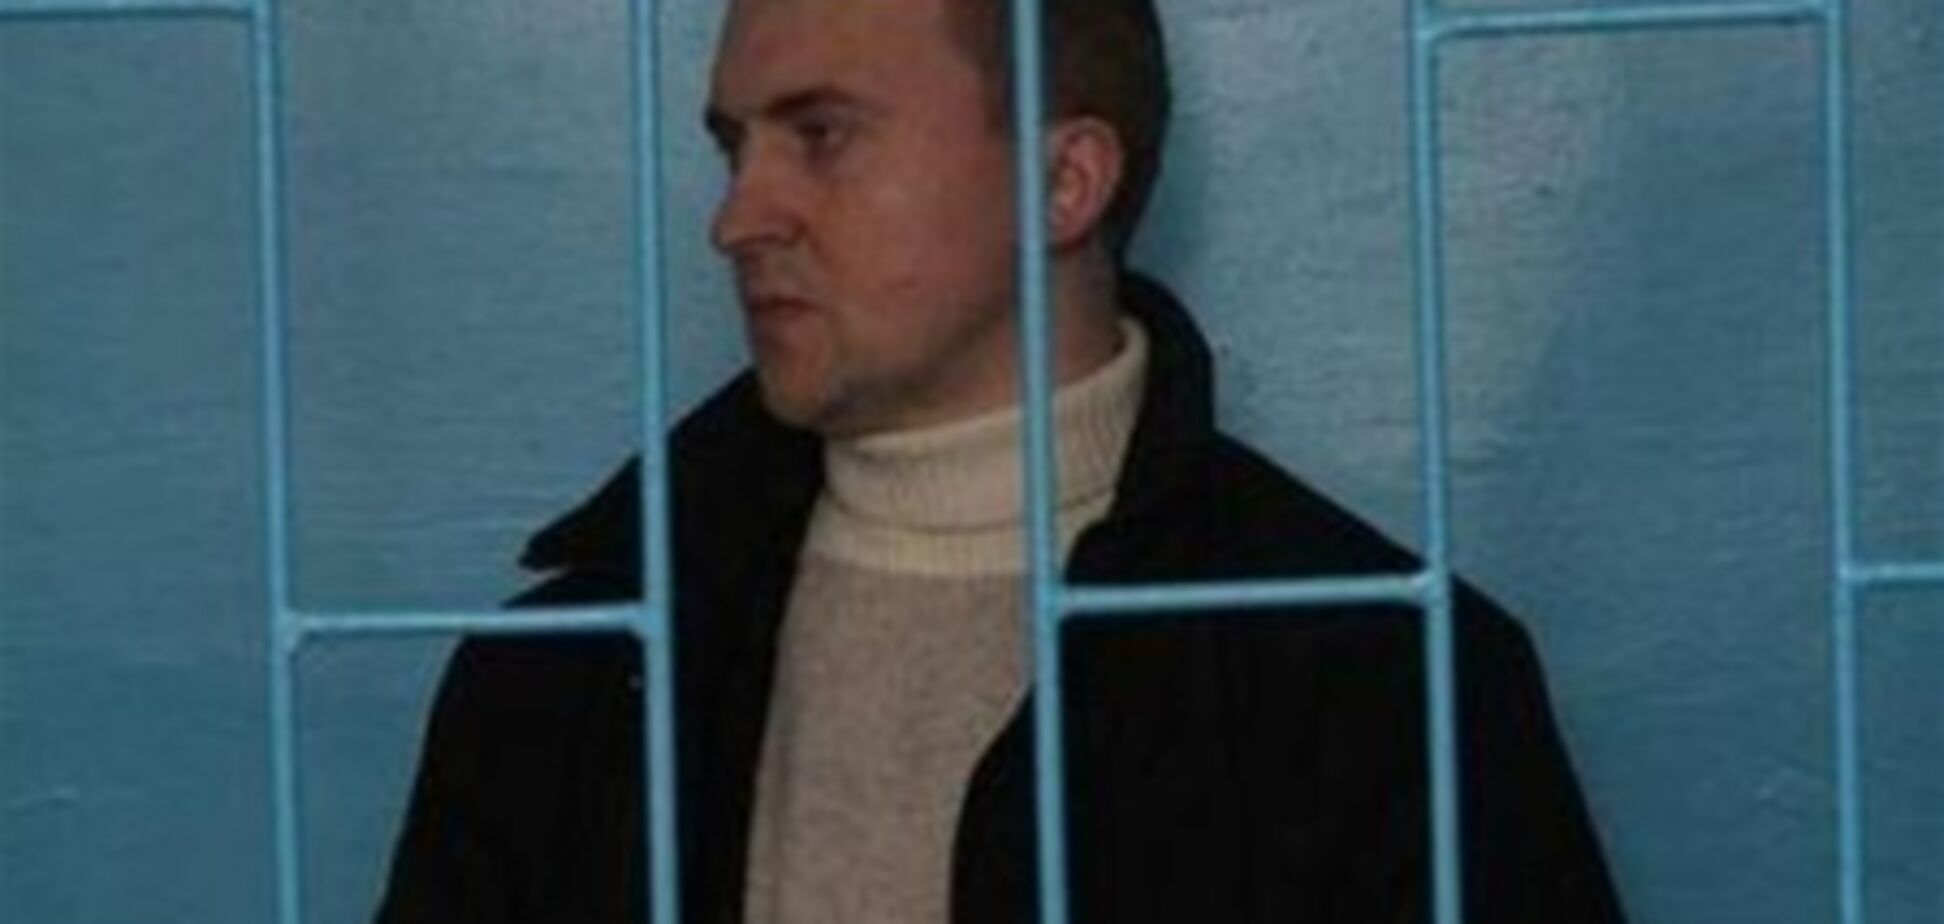 Экс-мэр Красноармейска получил 8 лет тюрьмы за взятку